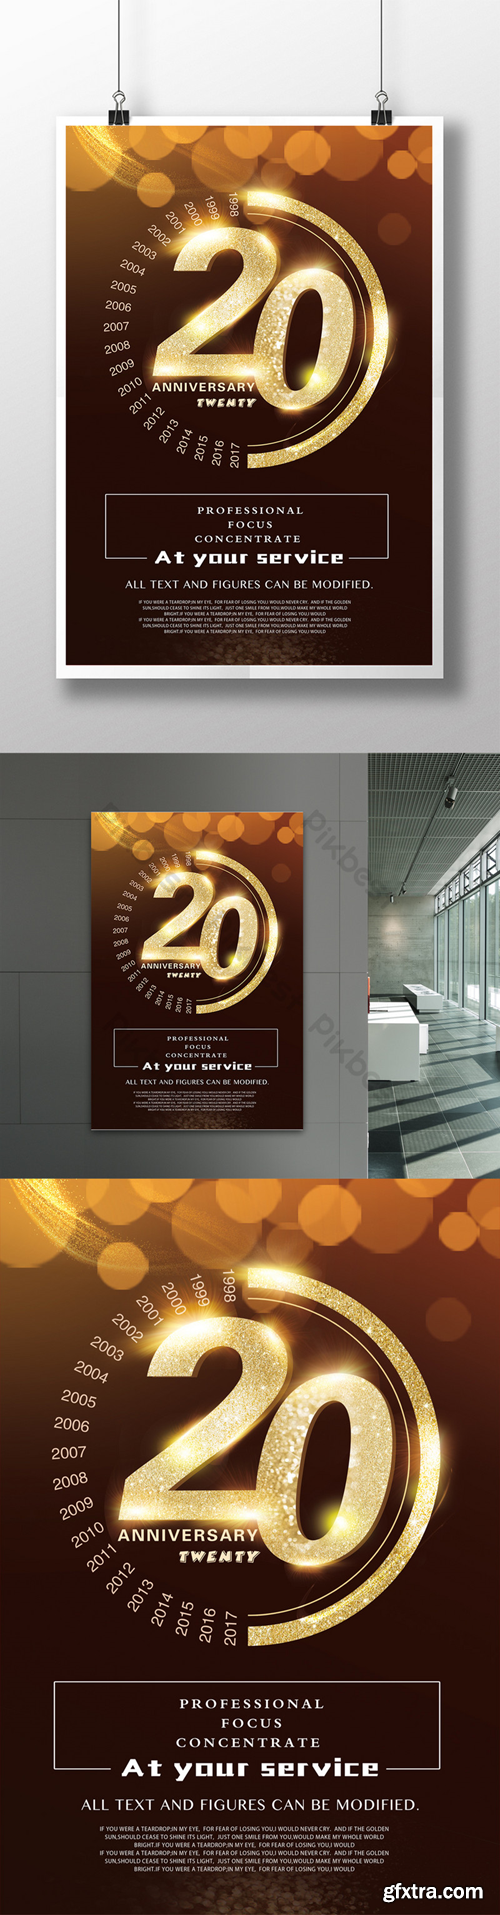 Creative high-end company anniversary corporate celebration poster design Template PSD